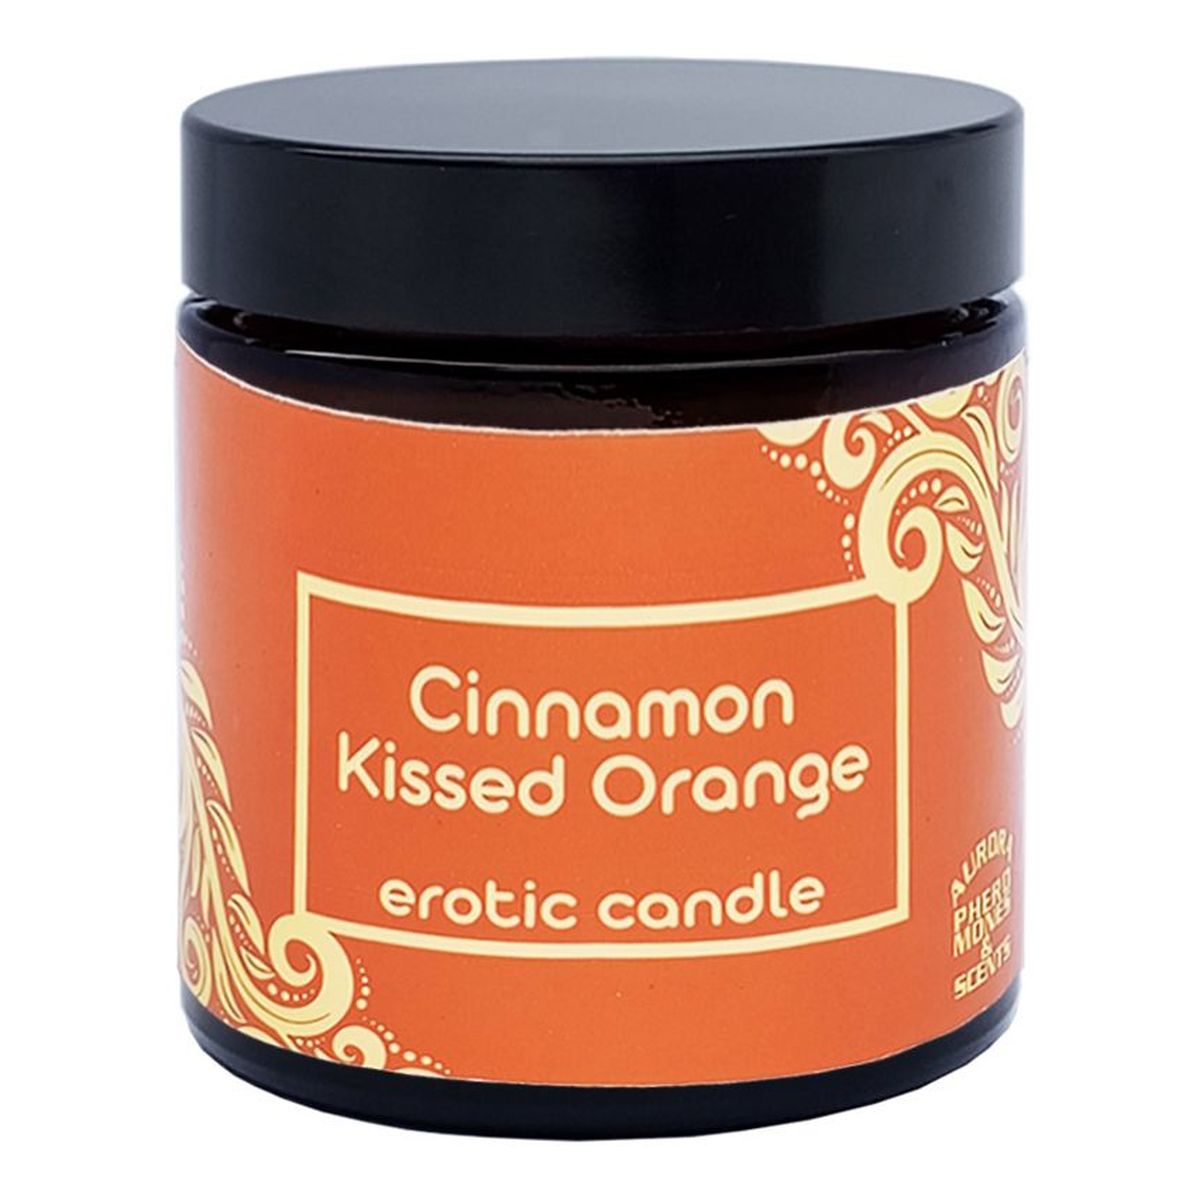 Aurora Erotic candle erotyczna świeca zapachowa cinnamon kissed orange